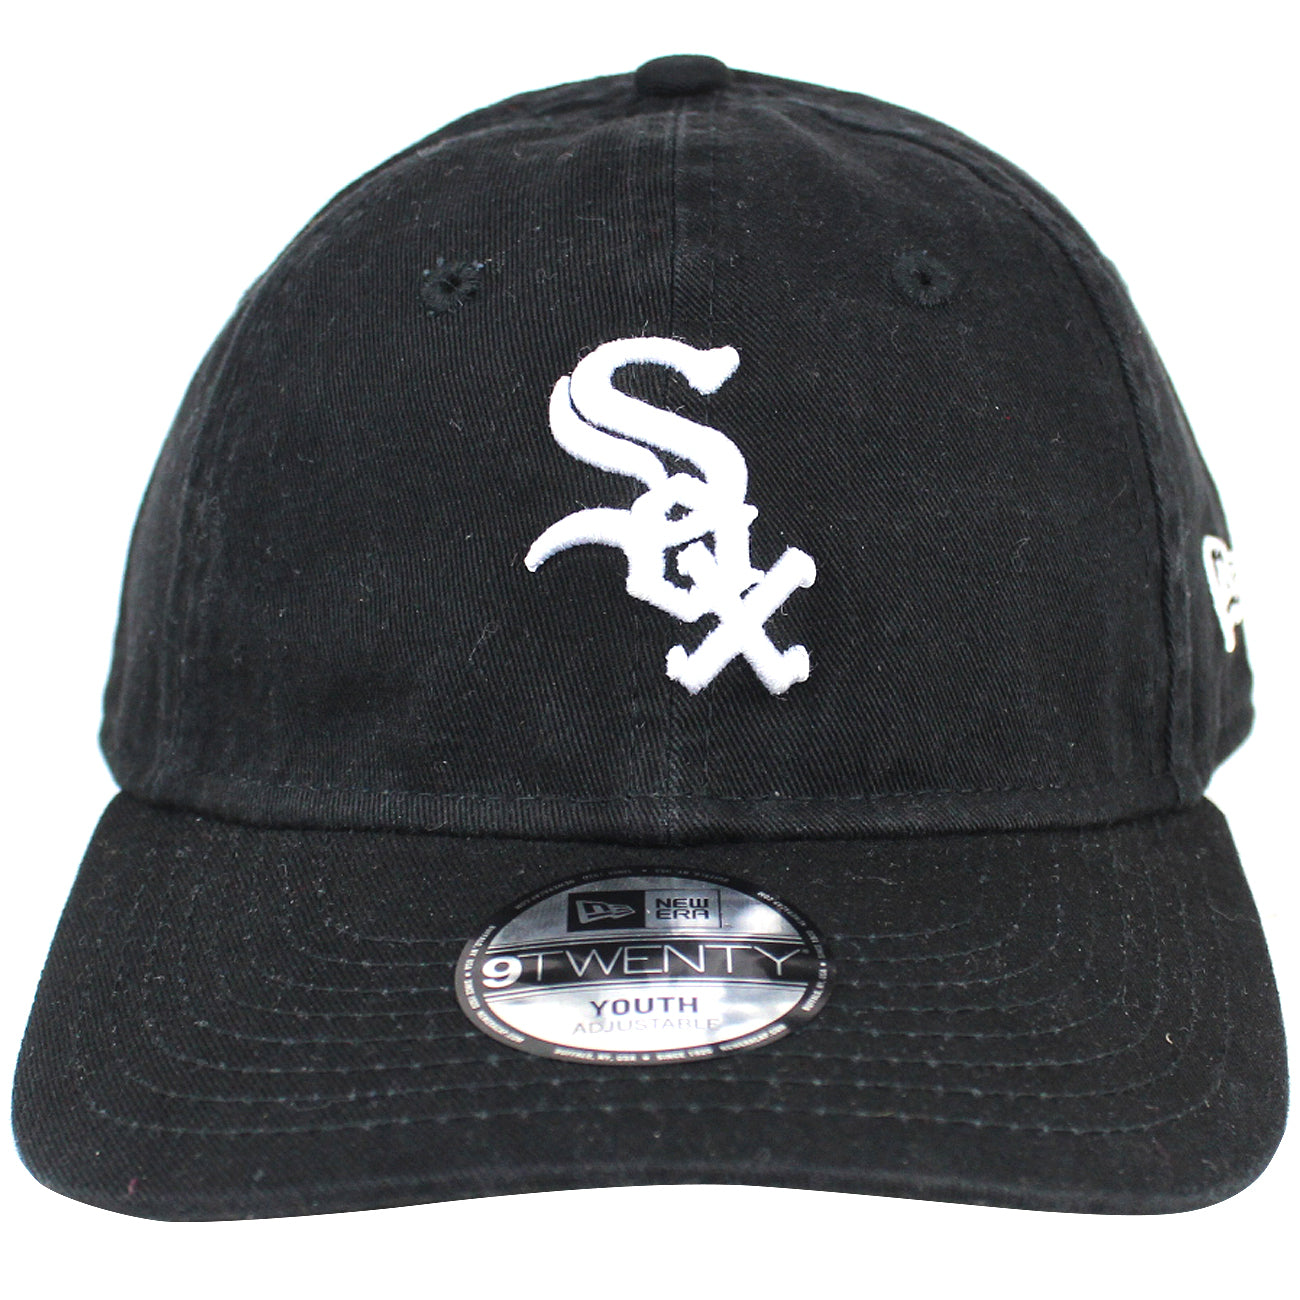 NEW ERA Youth Chicago White Sox 9TWENTY Adjustable Hat MLB Cap Black